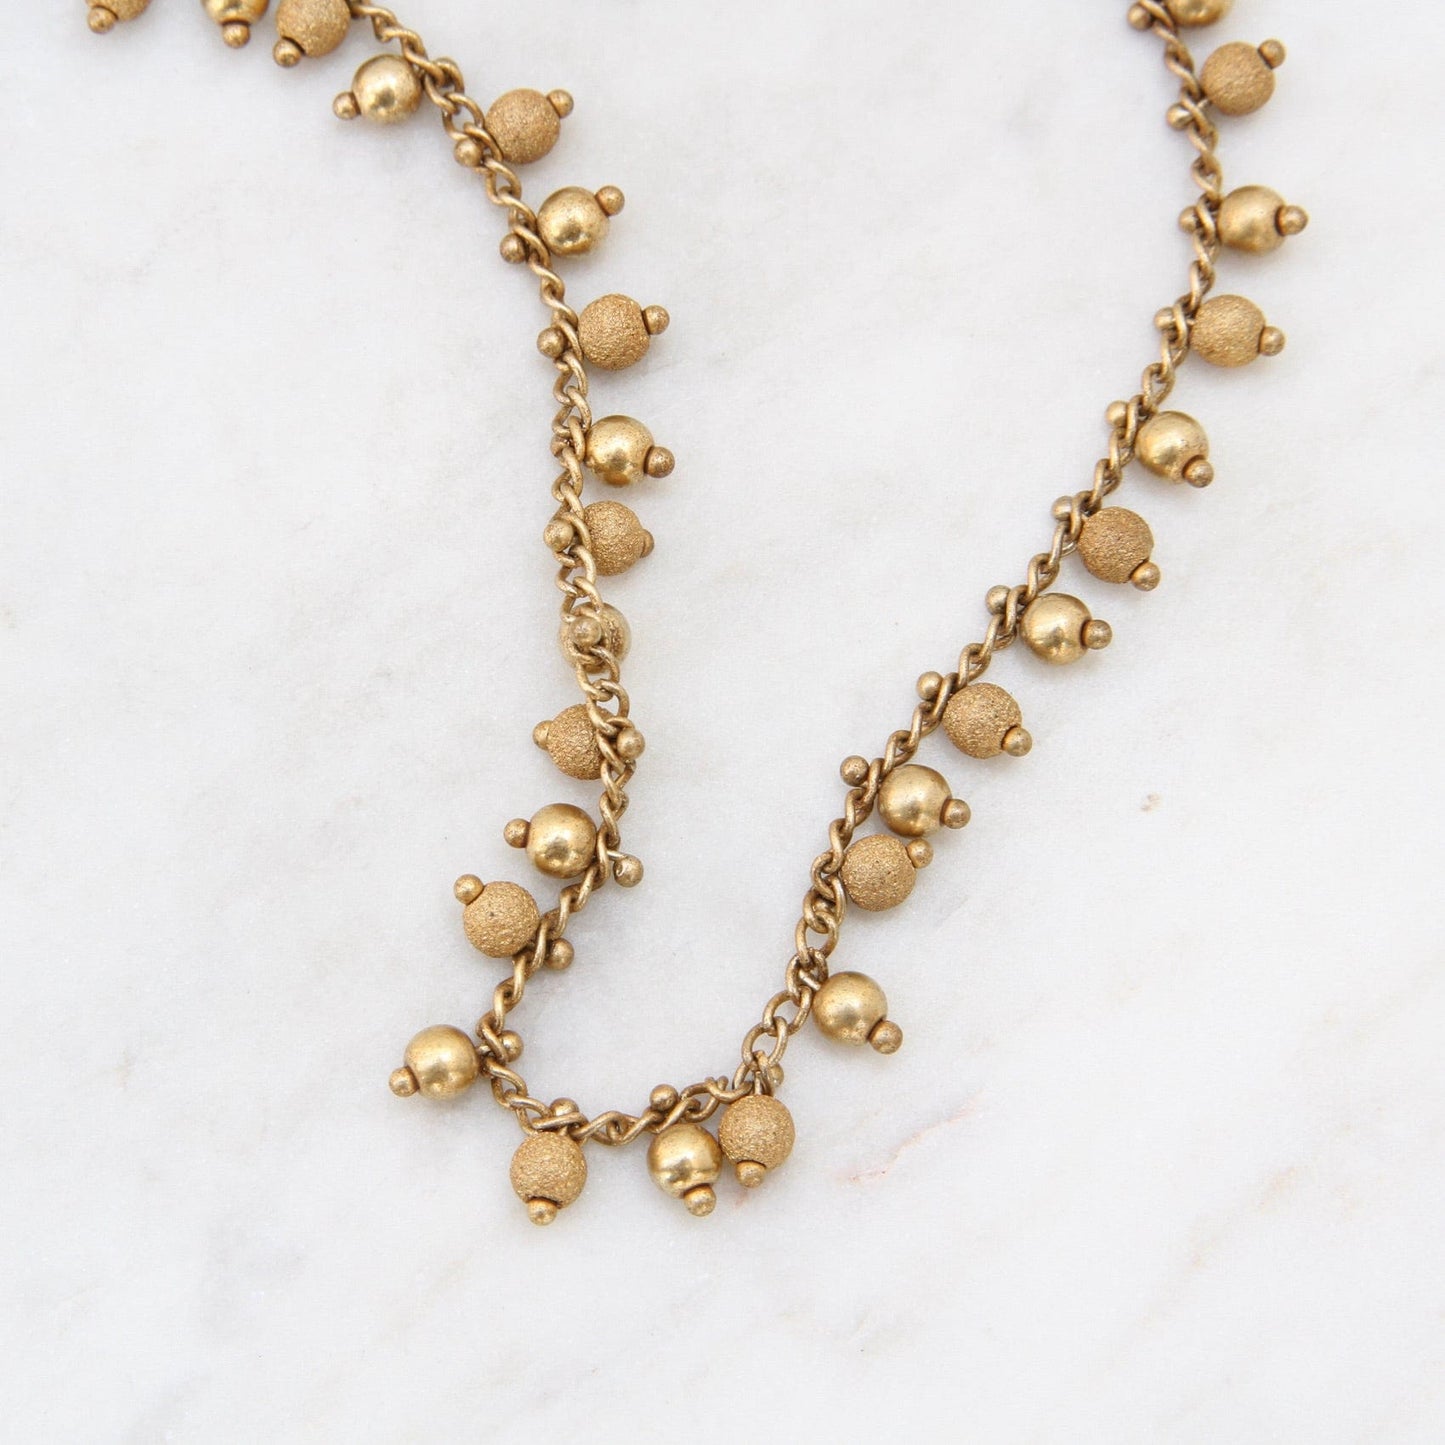 NKL-JM Bead Fringe Chain Necklace-Gold Plate